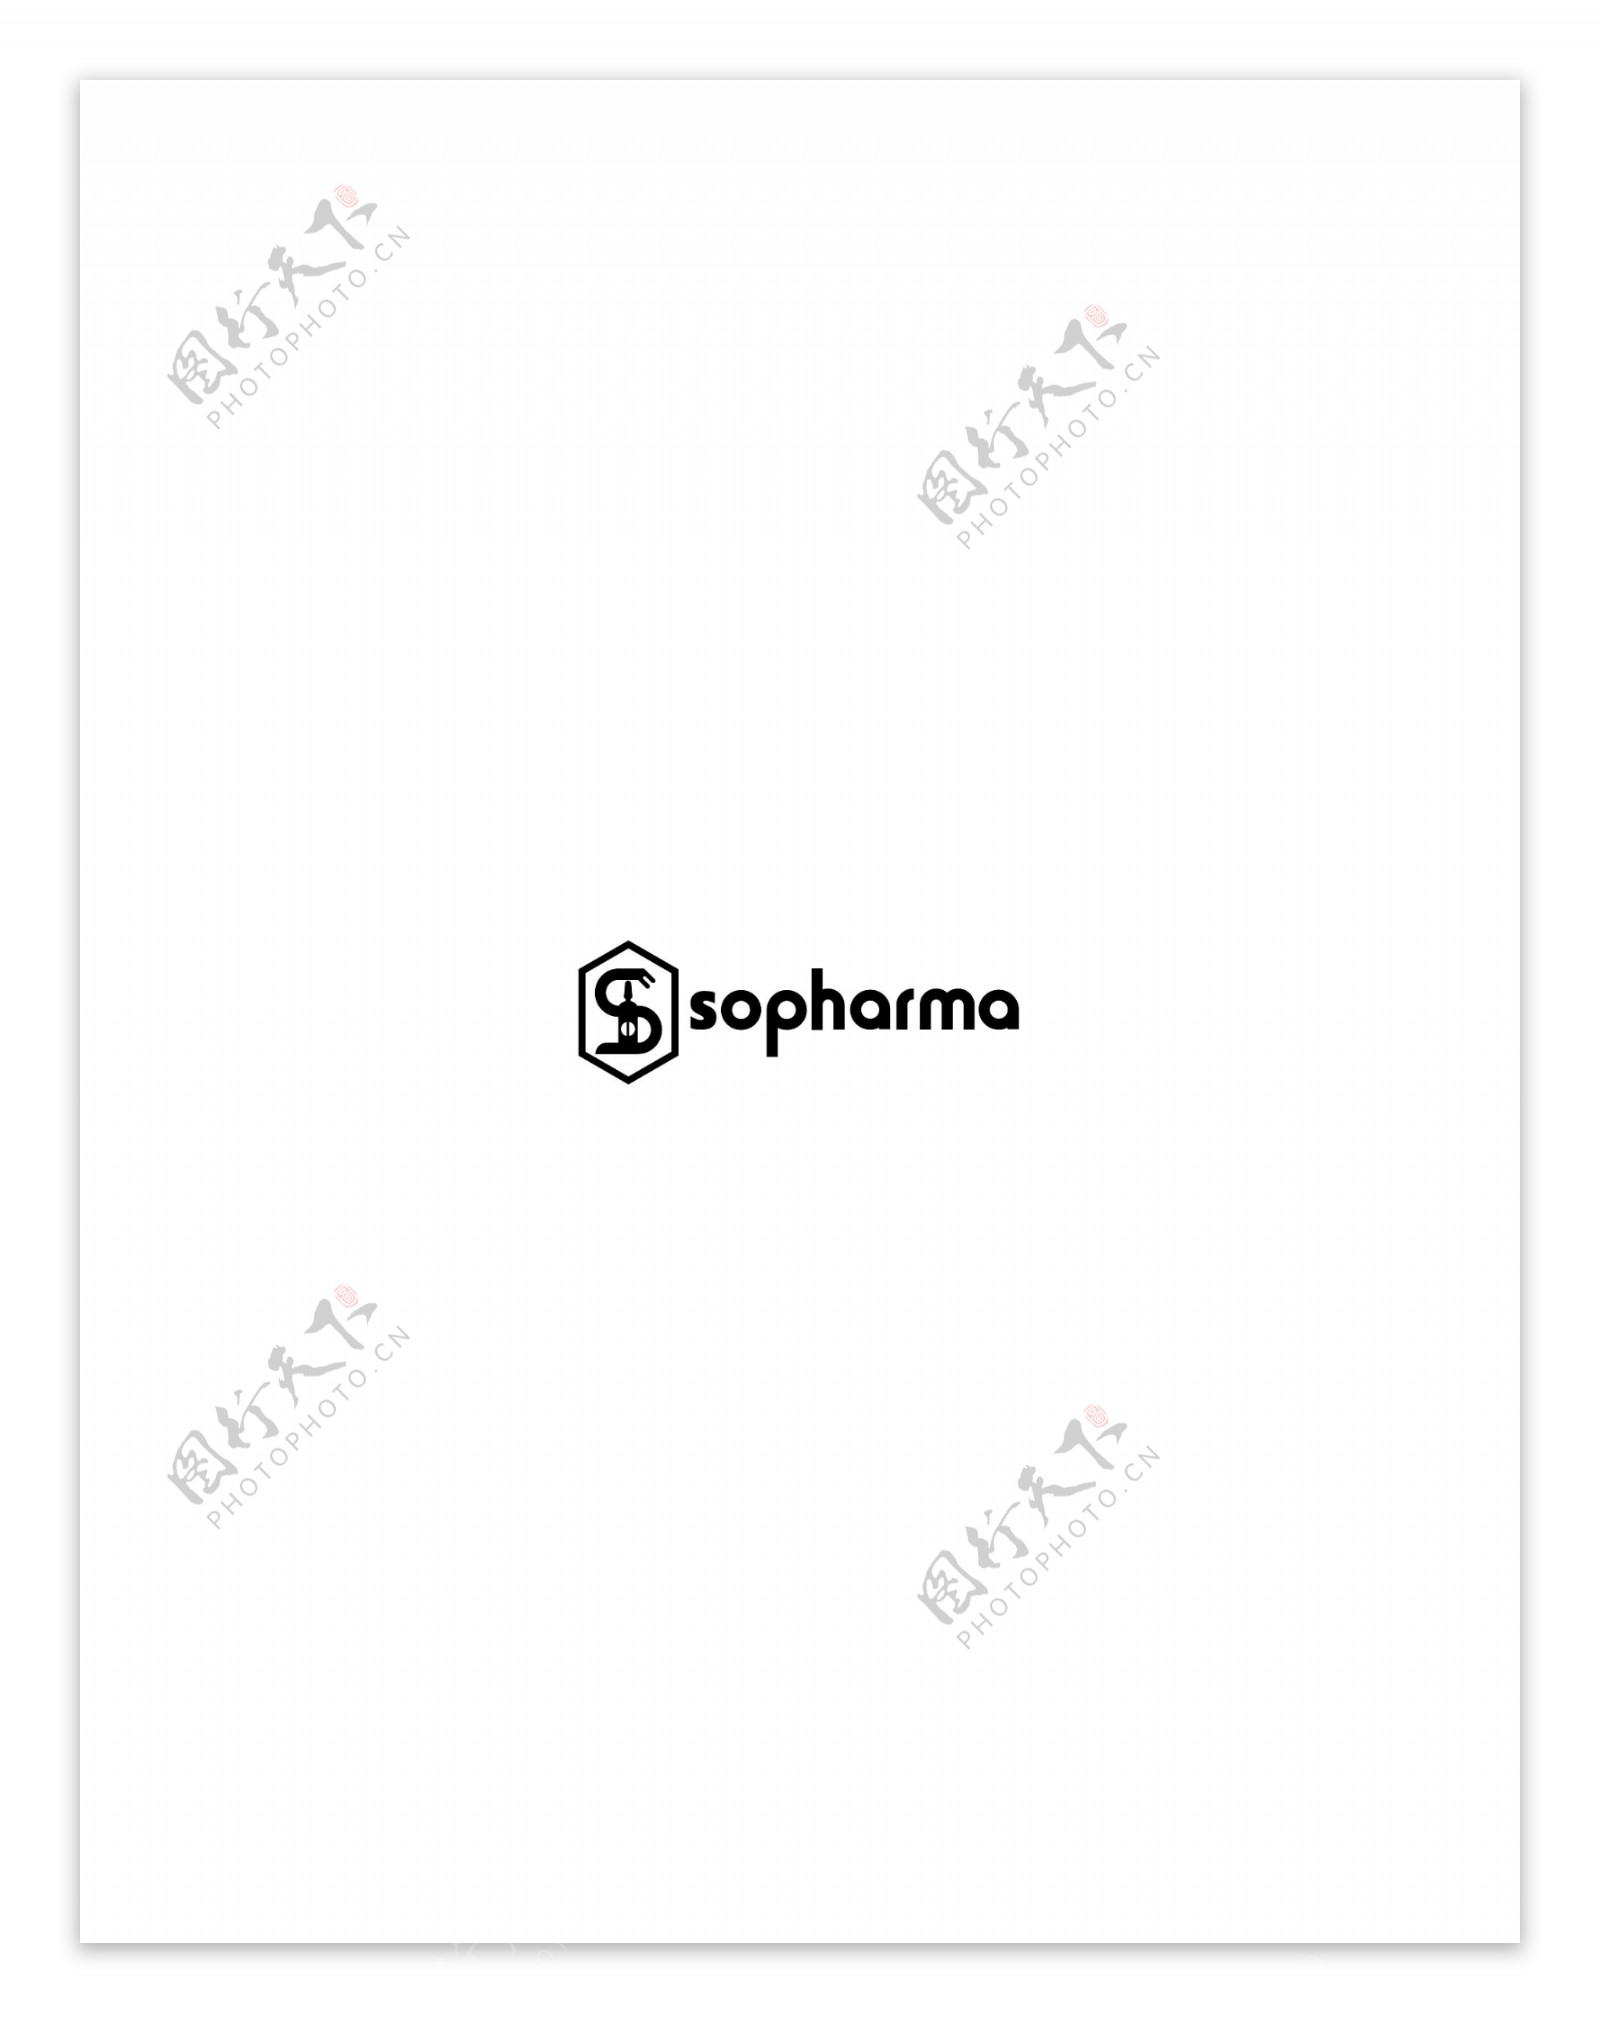 Sopharmalogo设计欣赏国外知名公司标志范例Sopharma下载标志设计欣赏